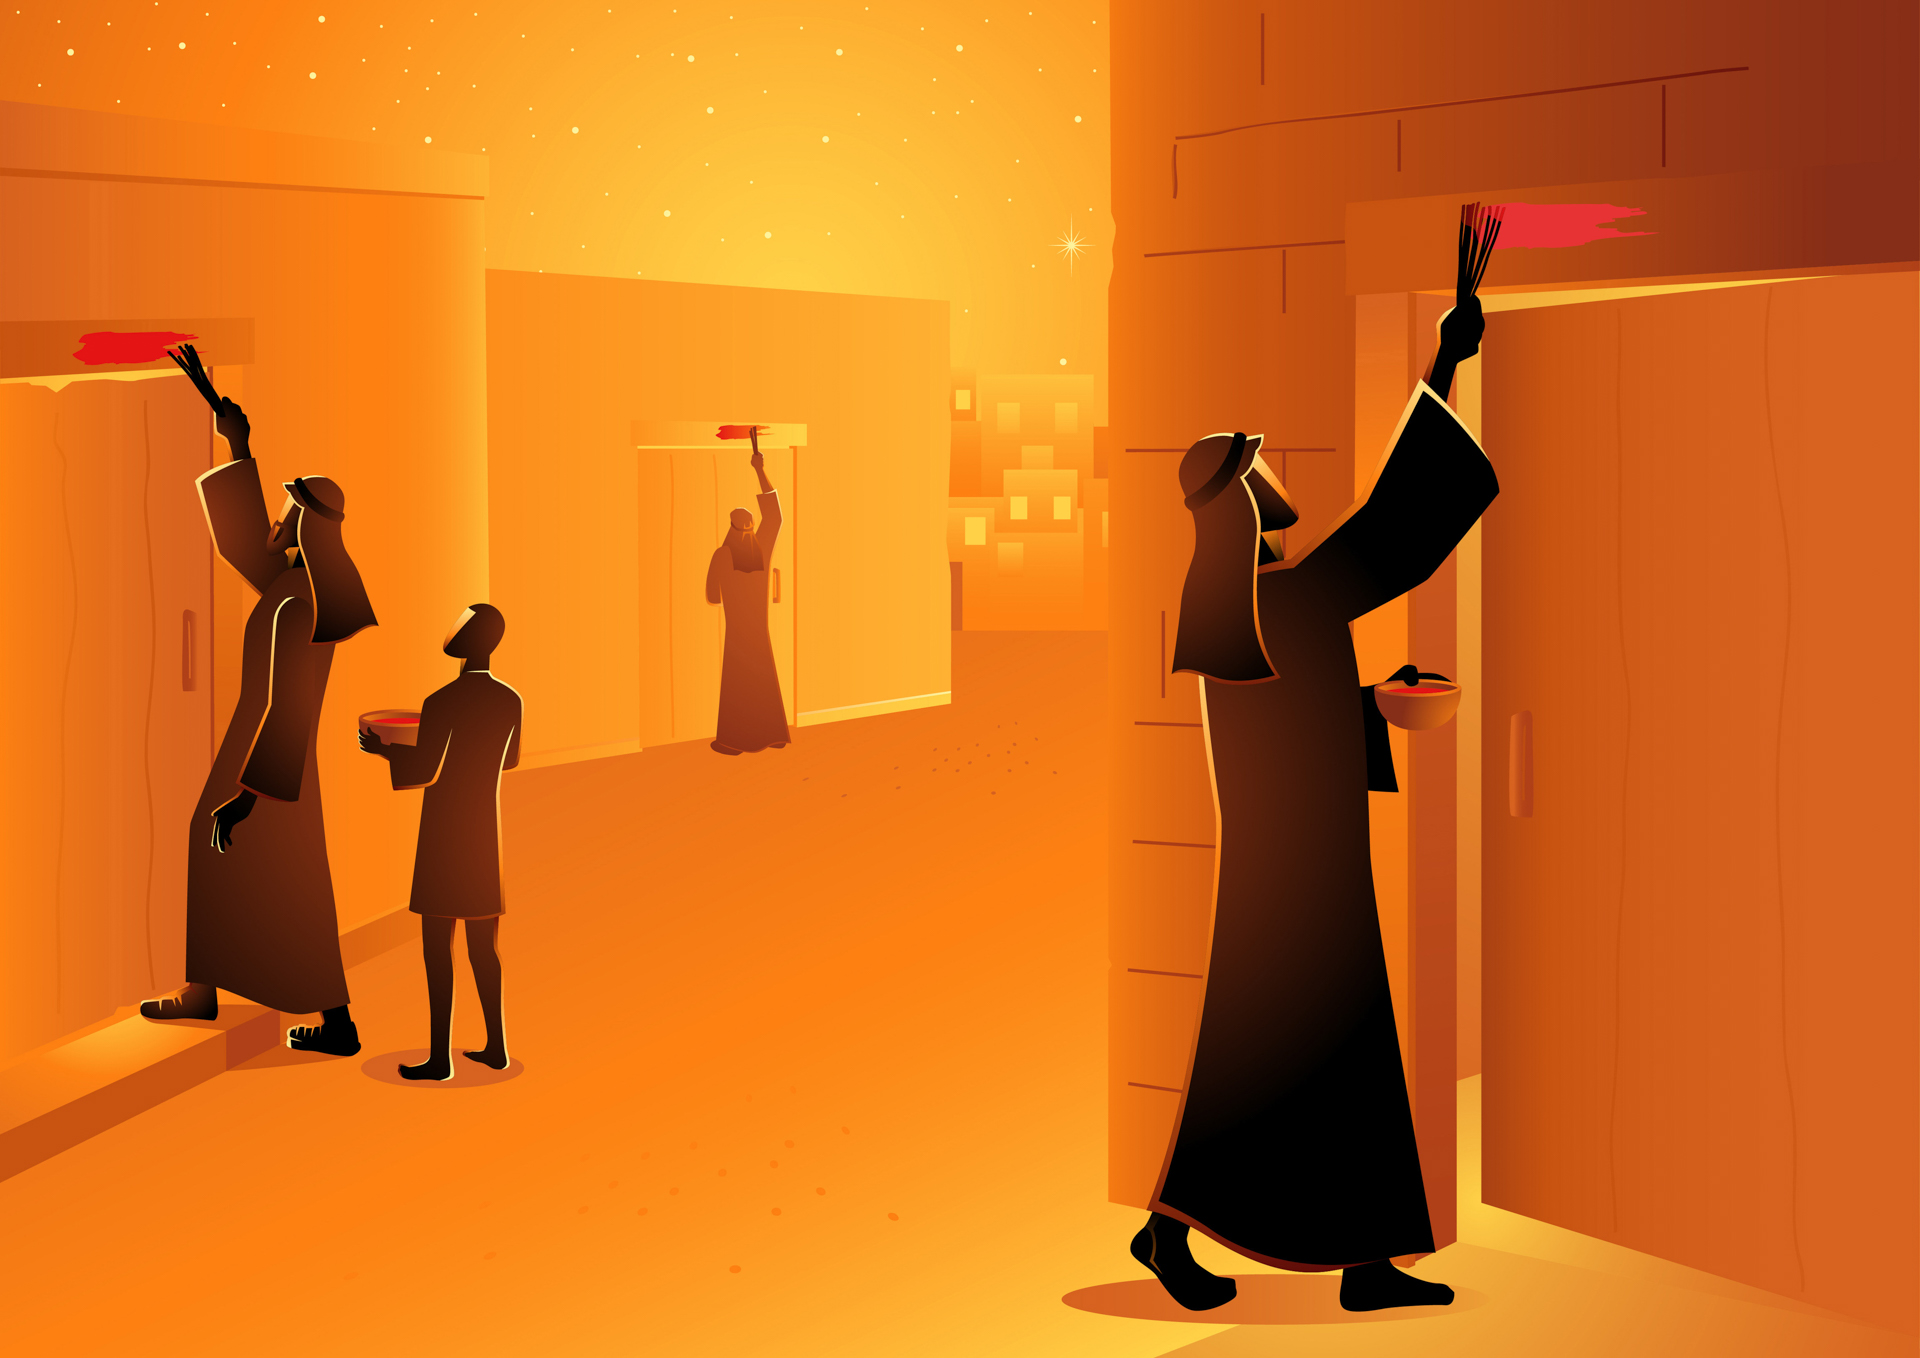 Biblical vector illustration of the Israelites marking their doorposts during passover